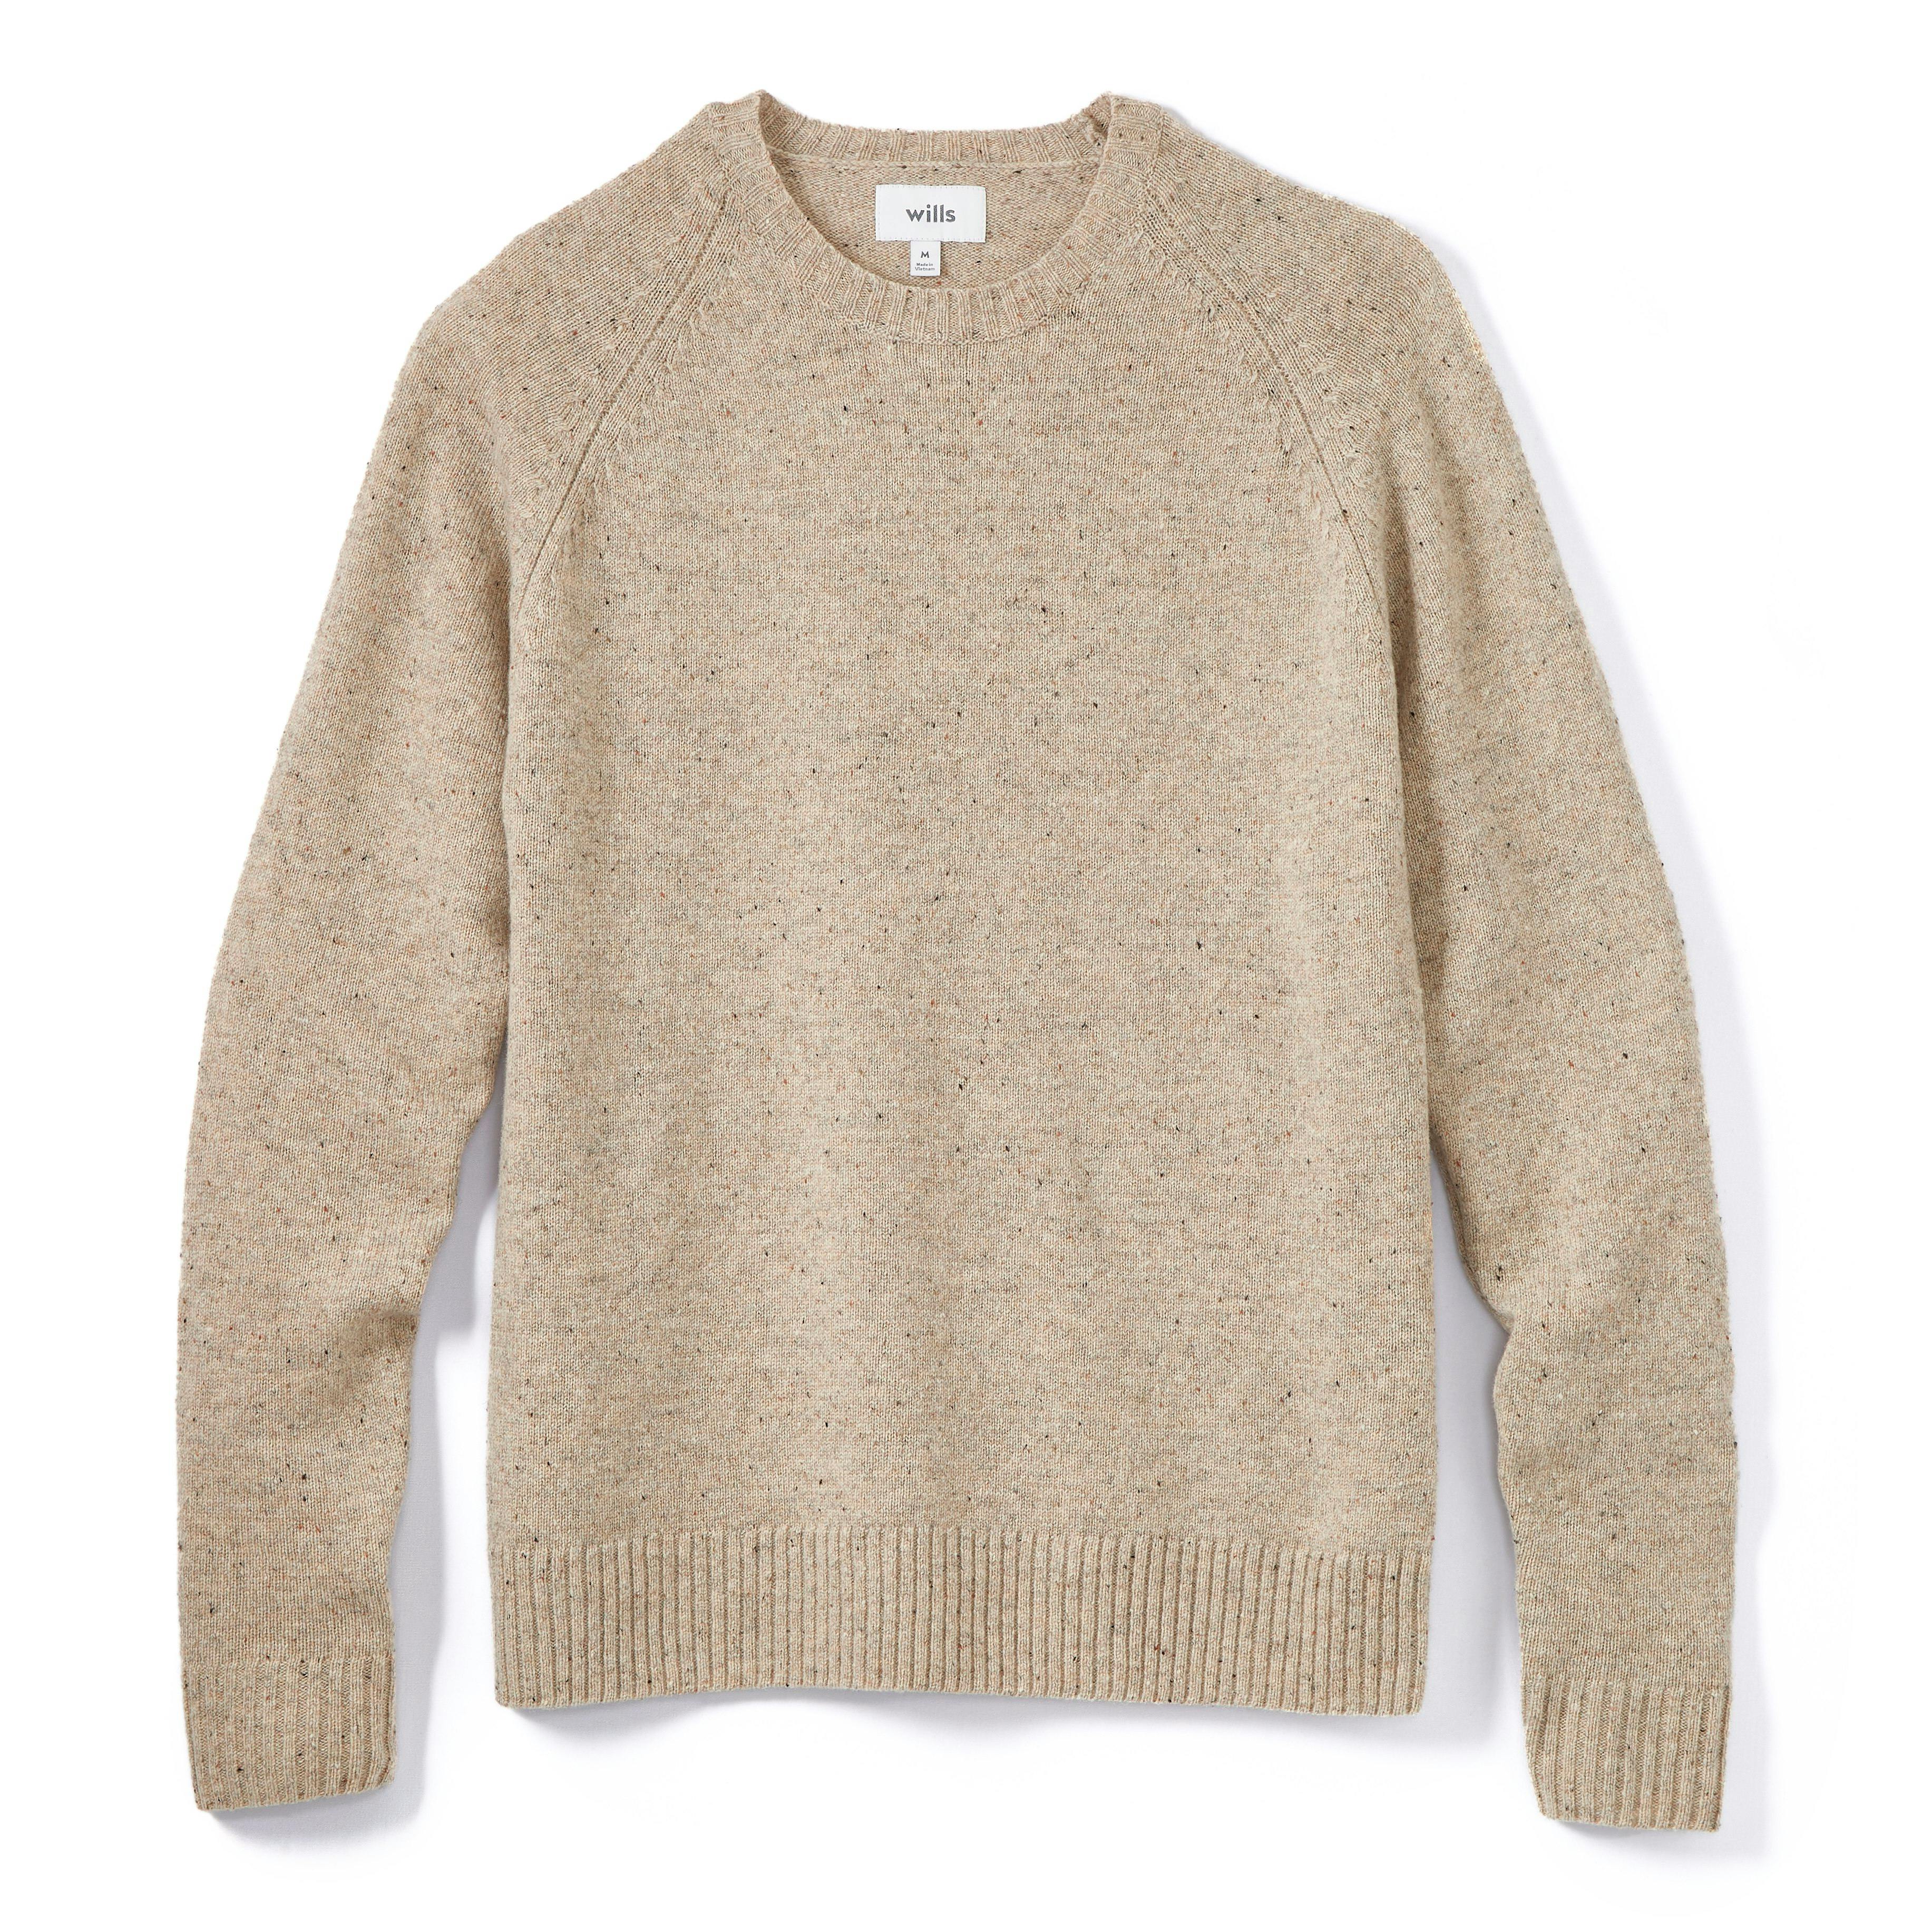 Merino Sweater - Buy online